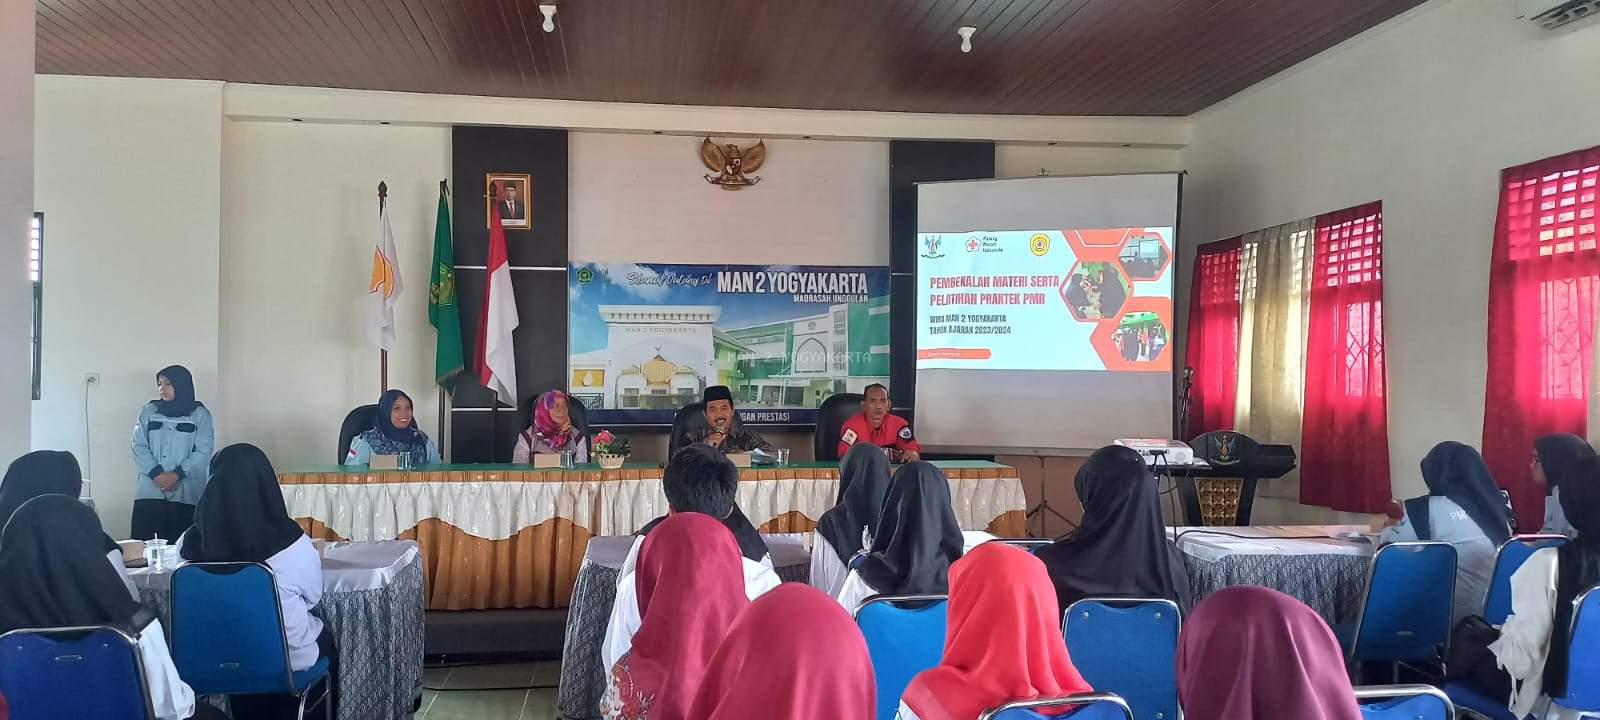 Pembekalan dan Pengukuhan PMR MAN 2 Yogyakarta